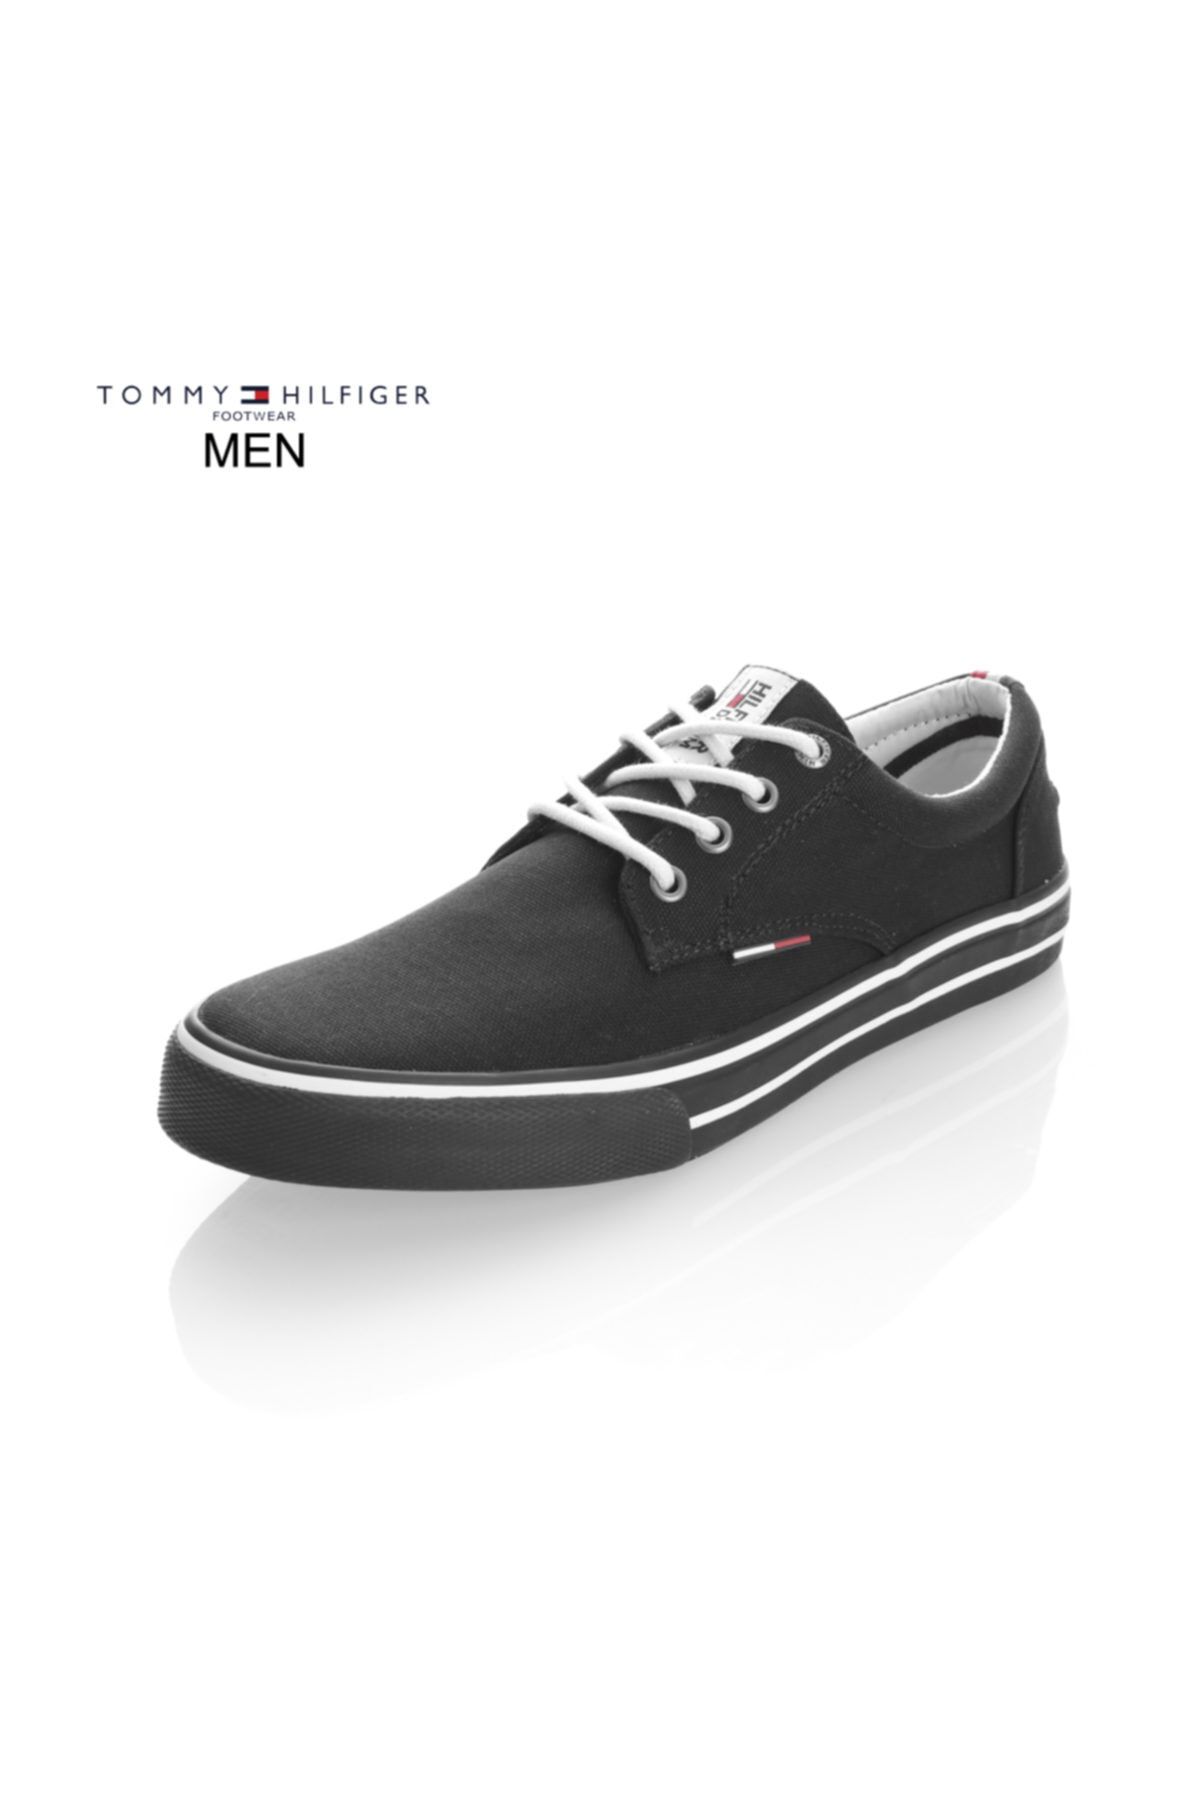 Tommy Hilfiger Siyah Erkek Fm0fm00300 990 V2385ıc 1d Sneakers Low Cut Black